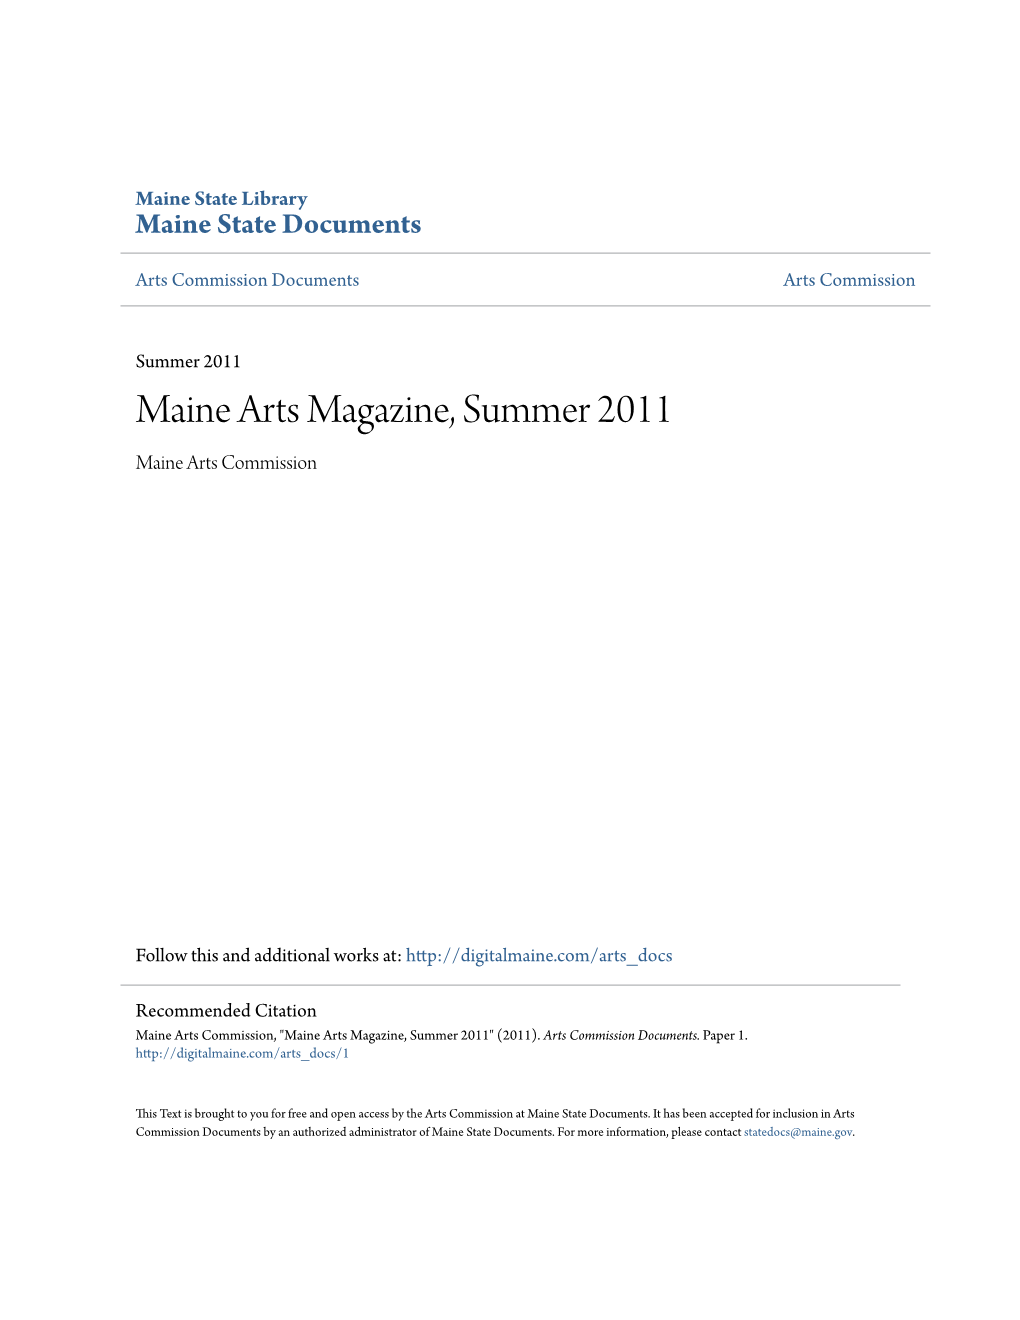 Maine Arts Magazine, Summer 2011 Maine Arts Commission